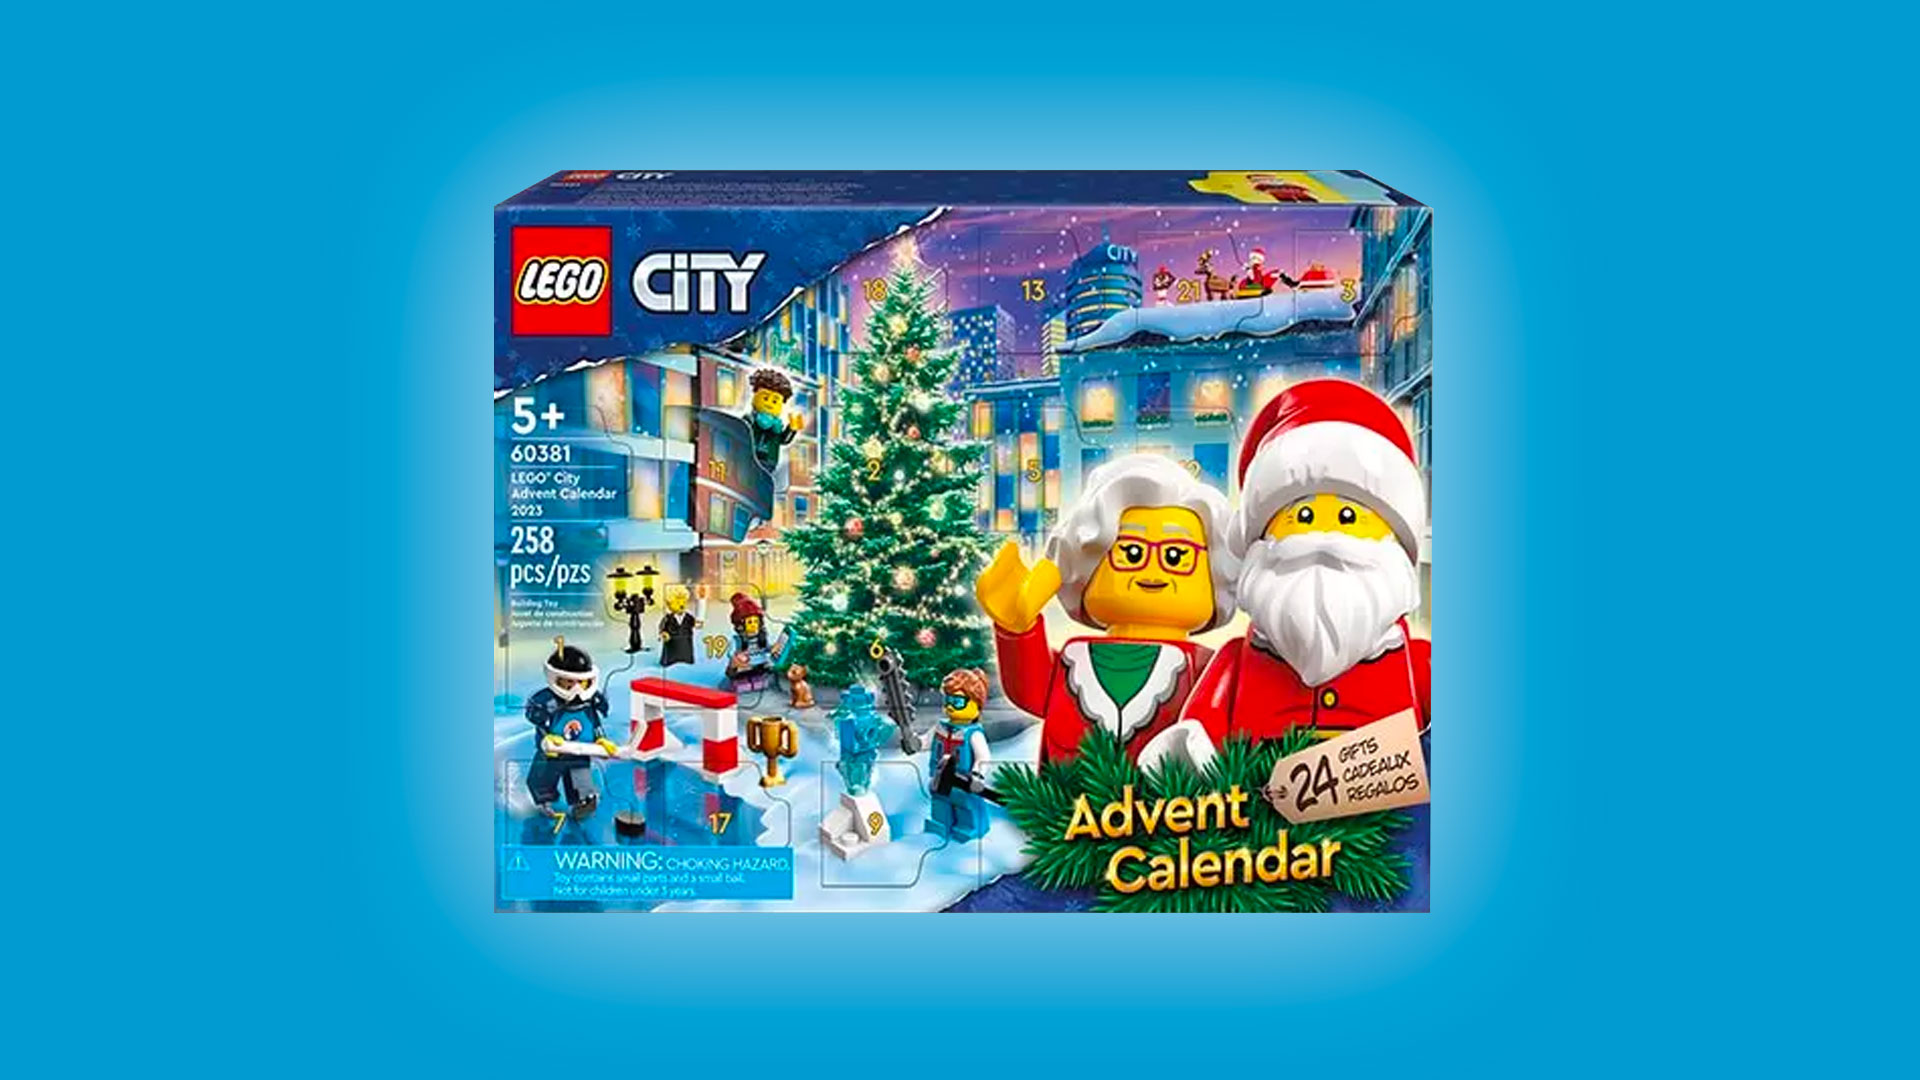 Lego City Advent Calendar at Aldi